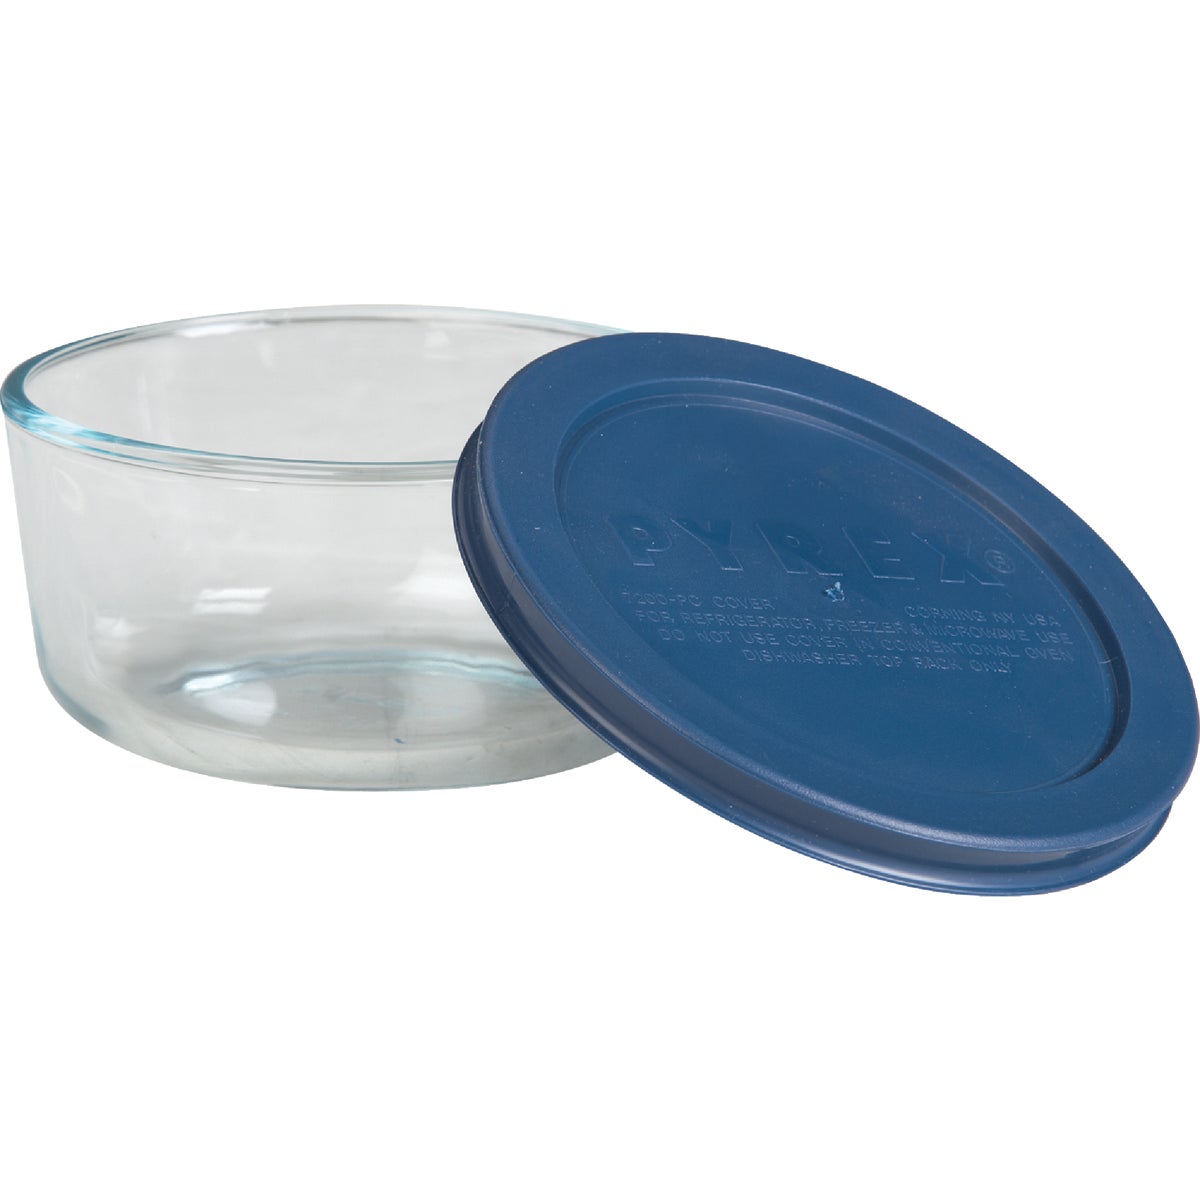 Pyrex Glass Storage, 7 Cup